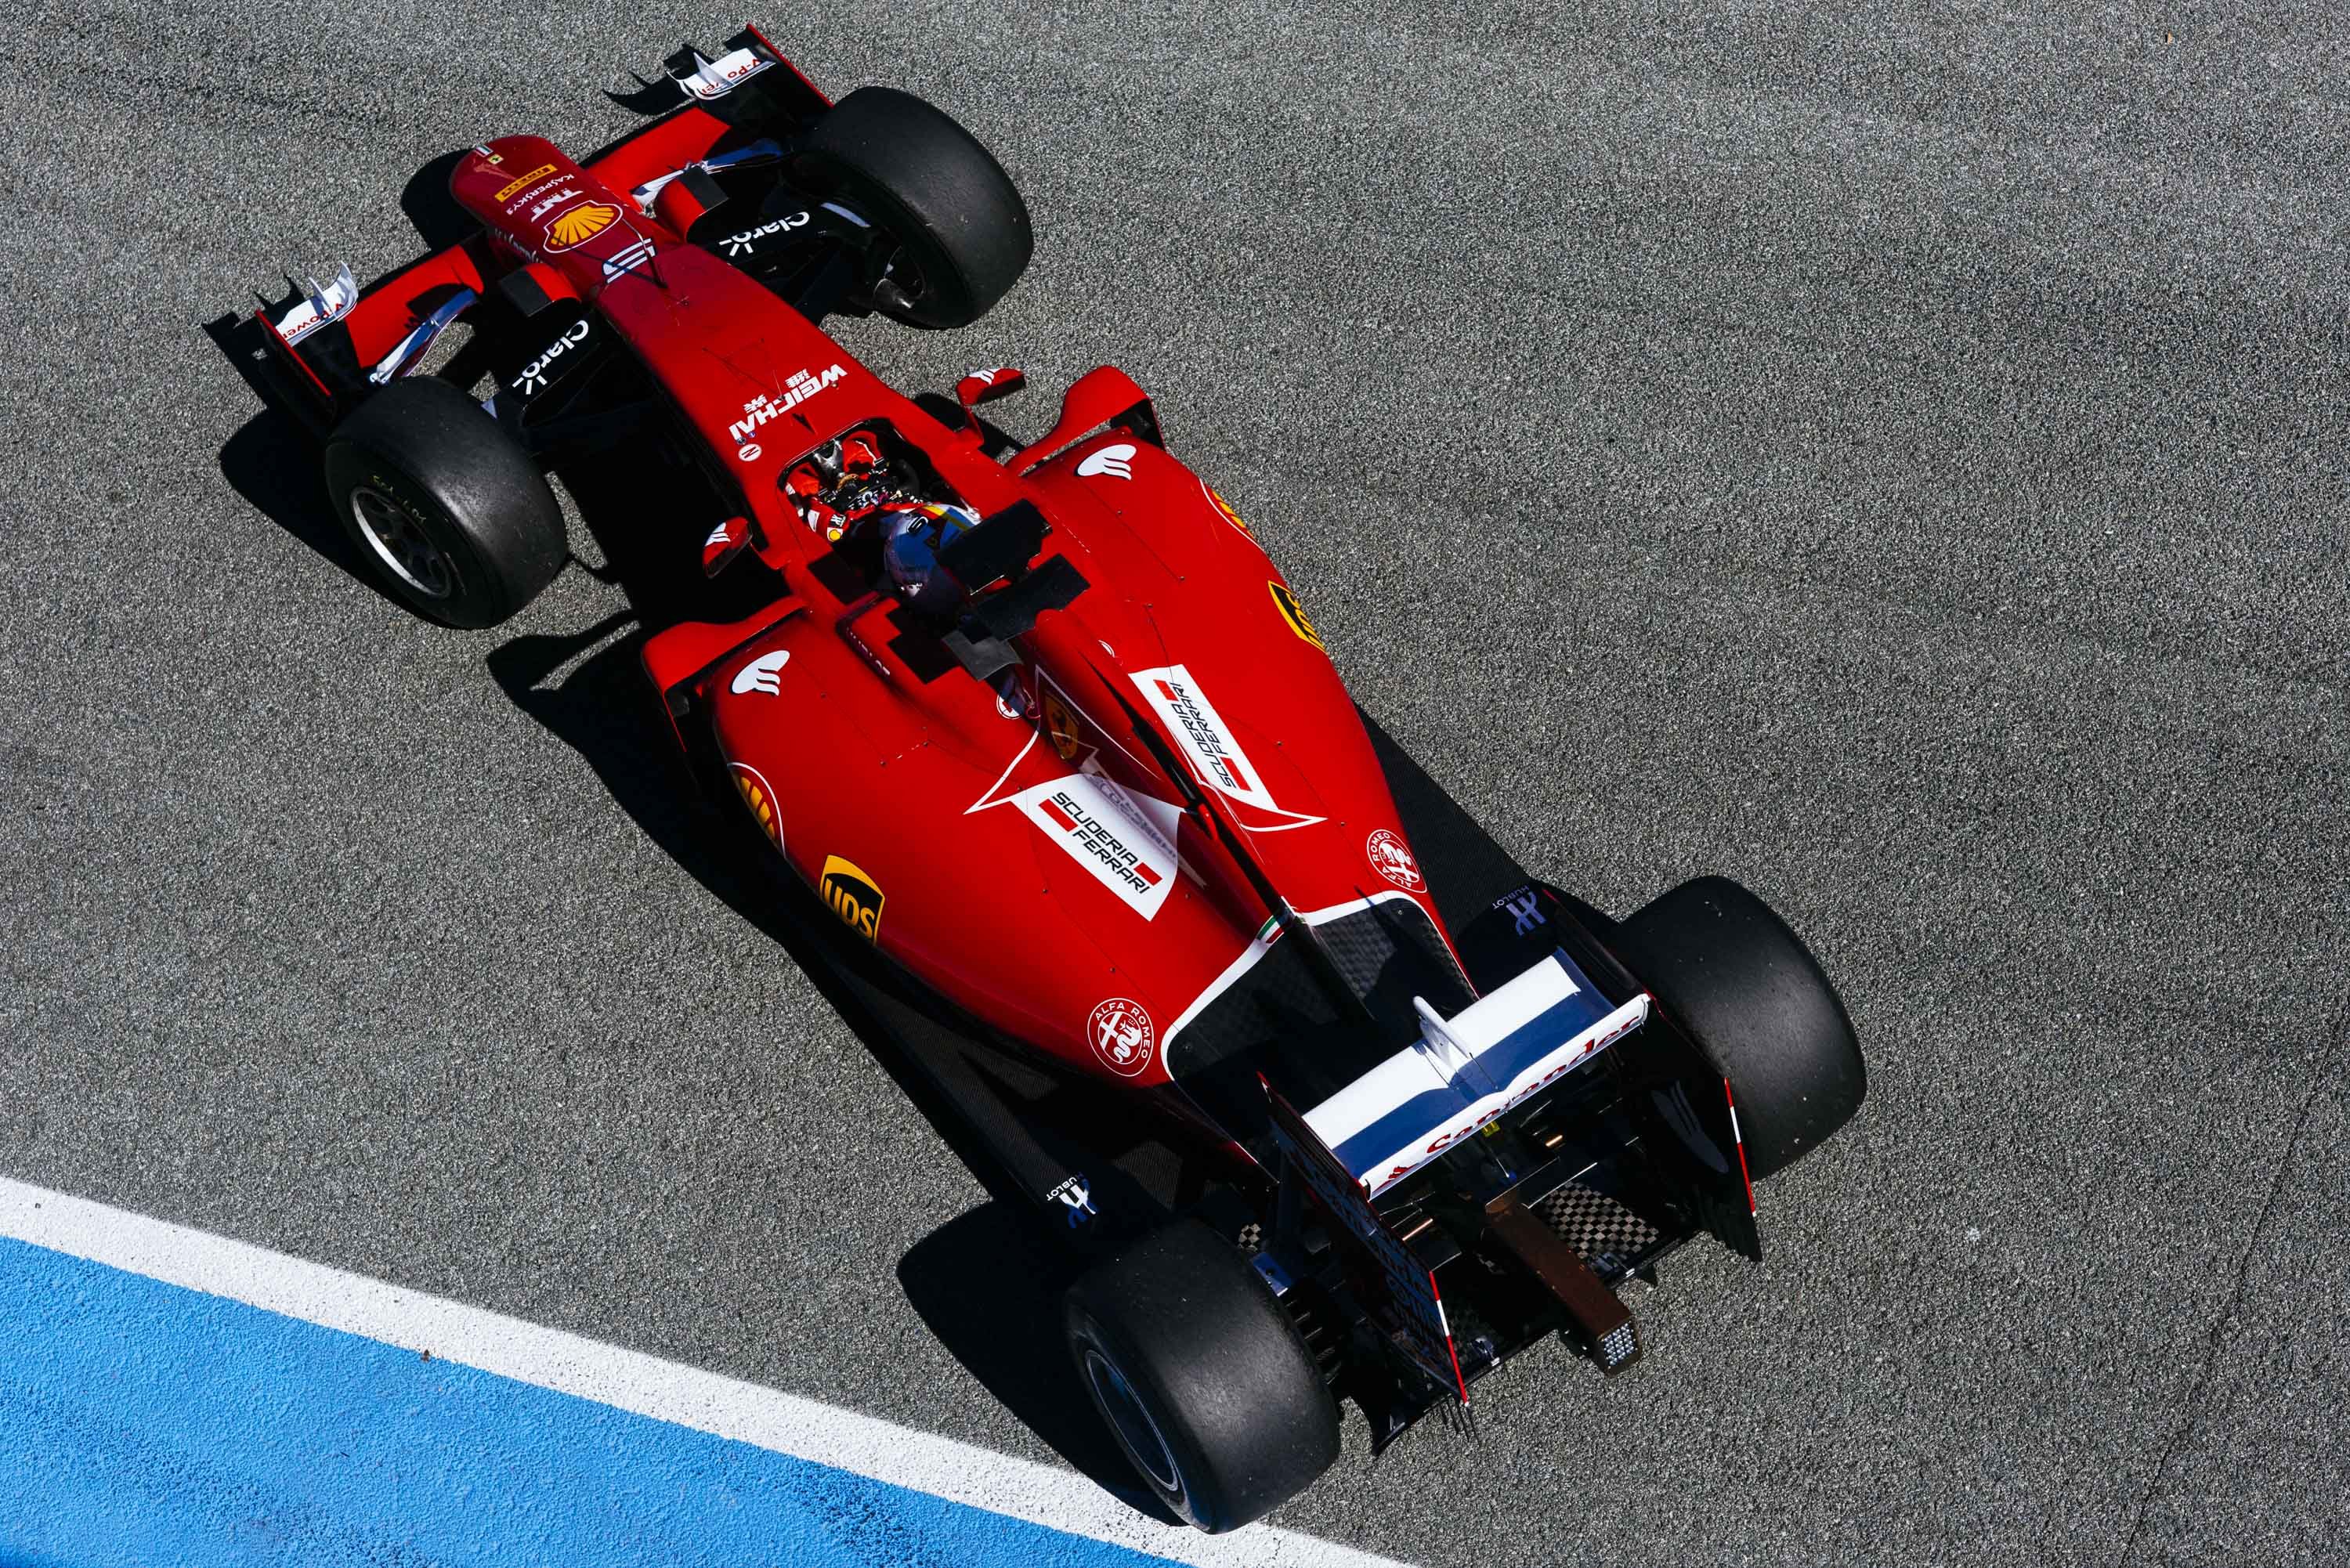 Ferrari t80. Ferrari SF 15t. Ferrari sf15-t 2015. Sebastian Vettel Toro Rosso. E-SF-15.